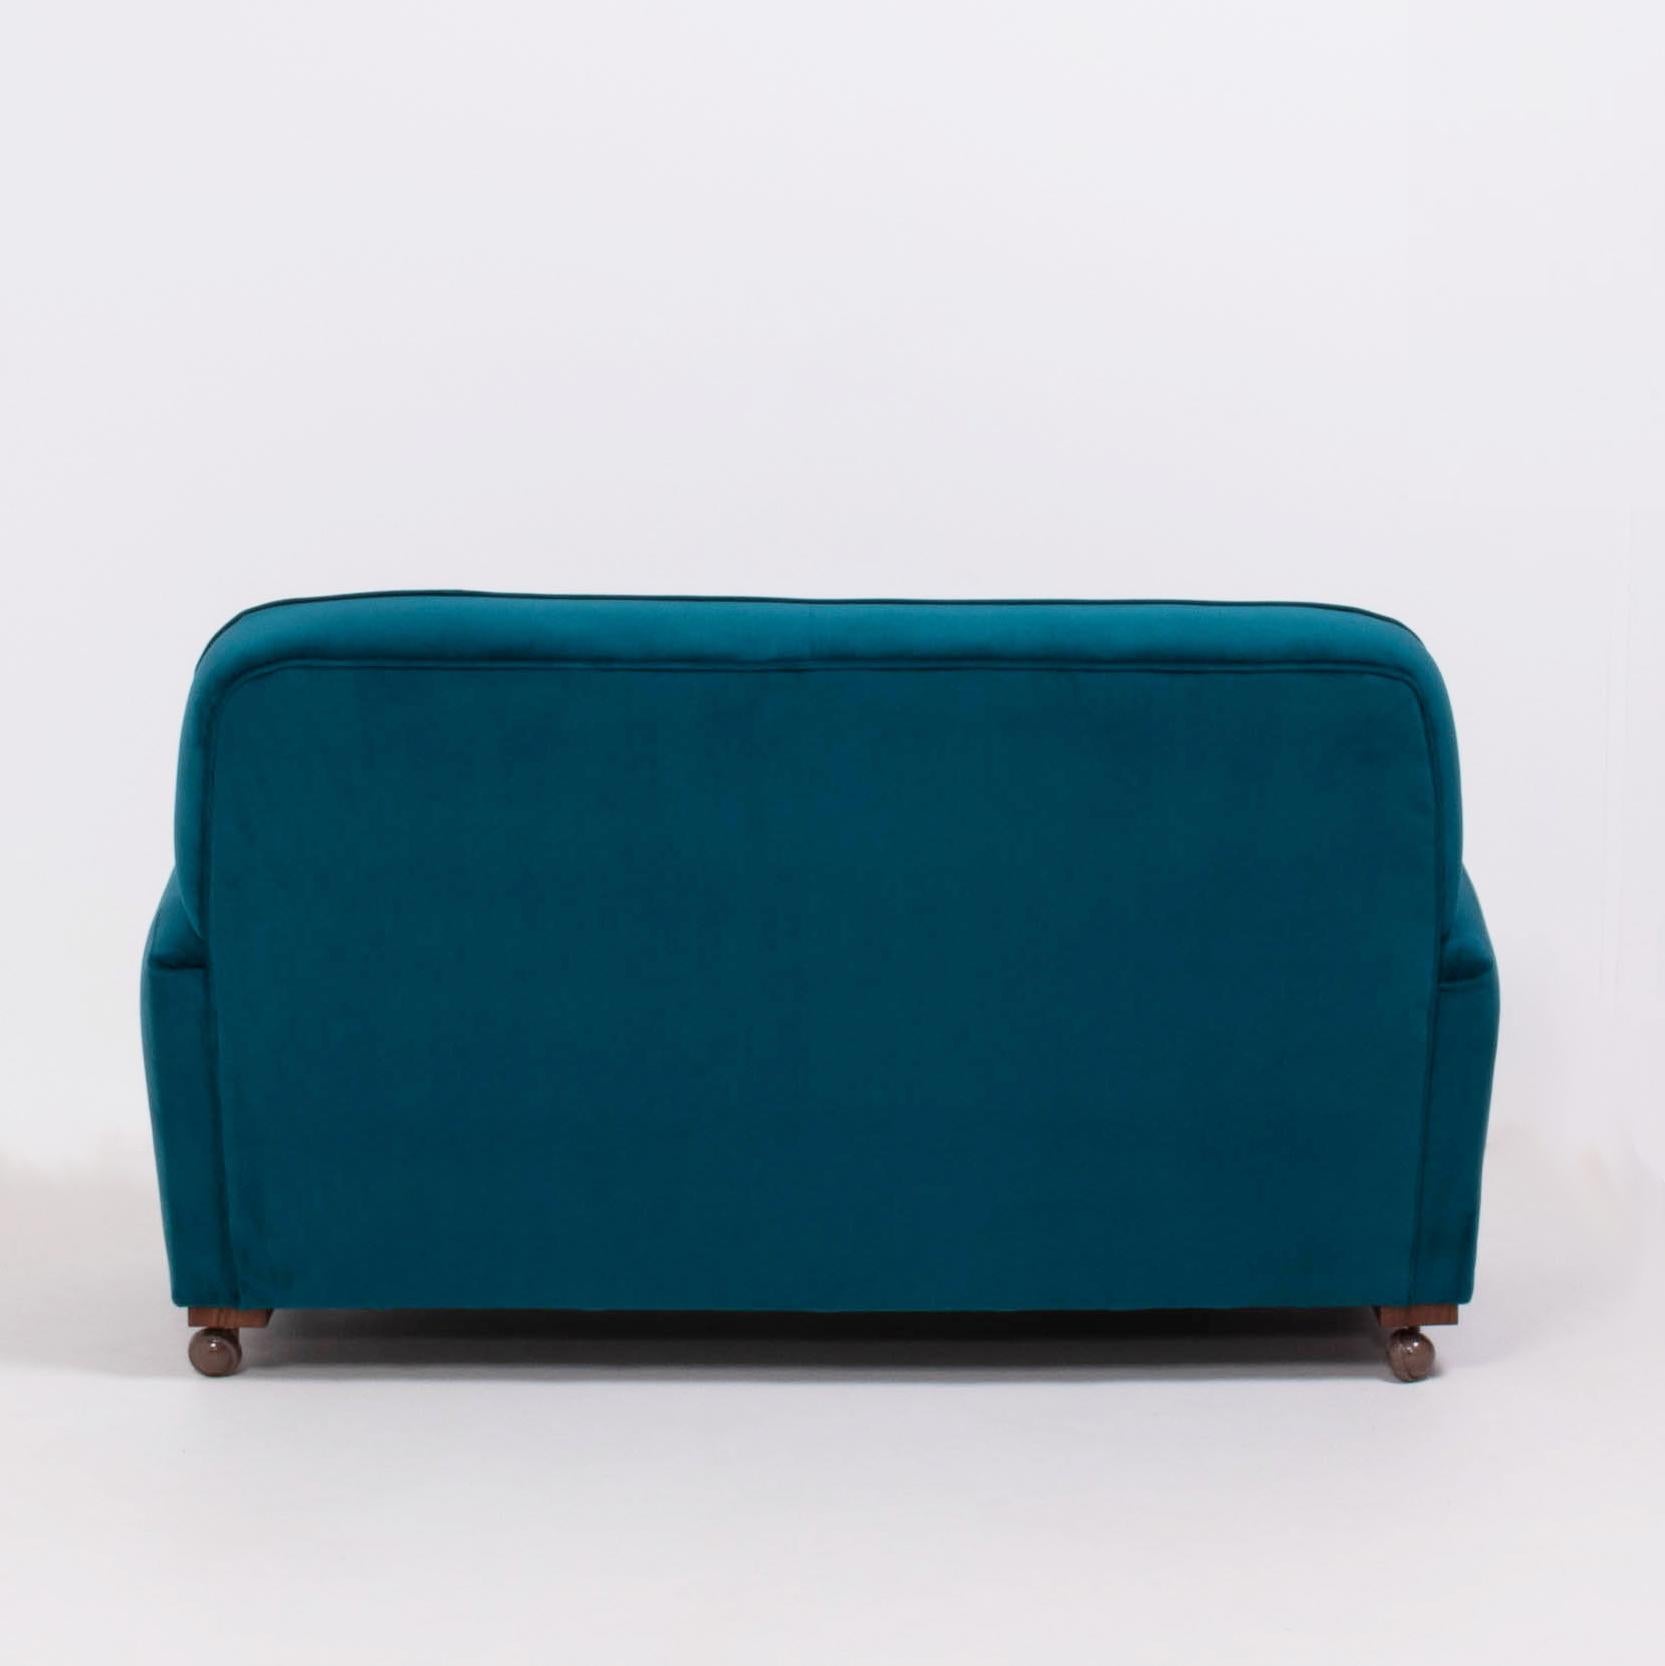 Fabric Original 1930s Art Deco Curved Blue Teal Velvet Sofa Newly Upholstered